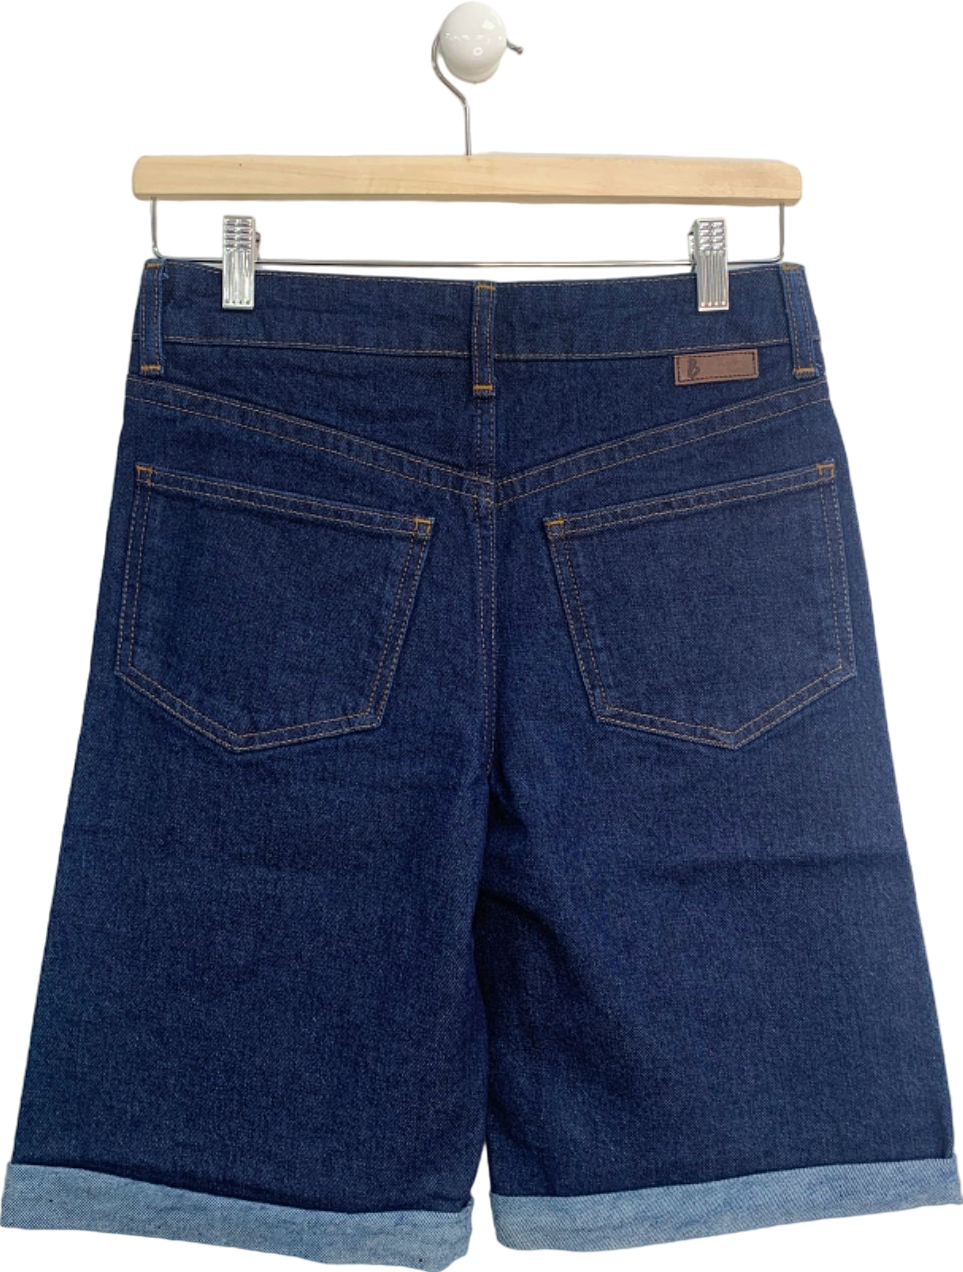 Boden Dark Blue Denim Shorts Size UK 6